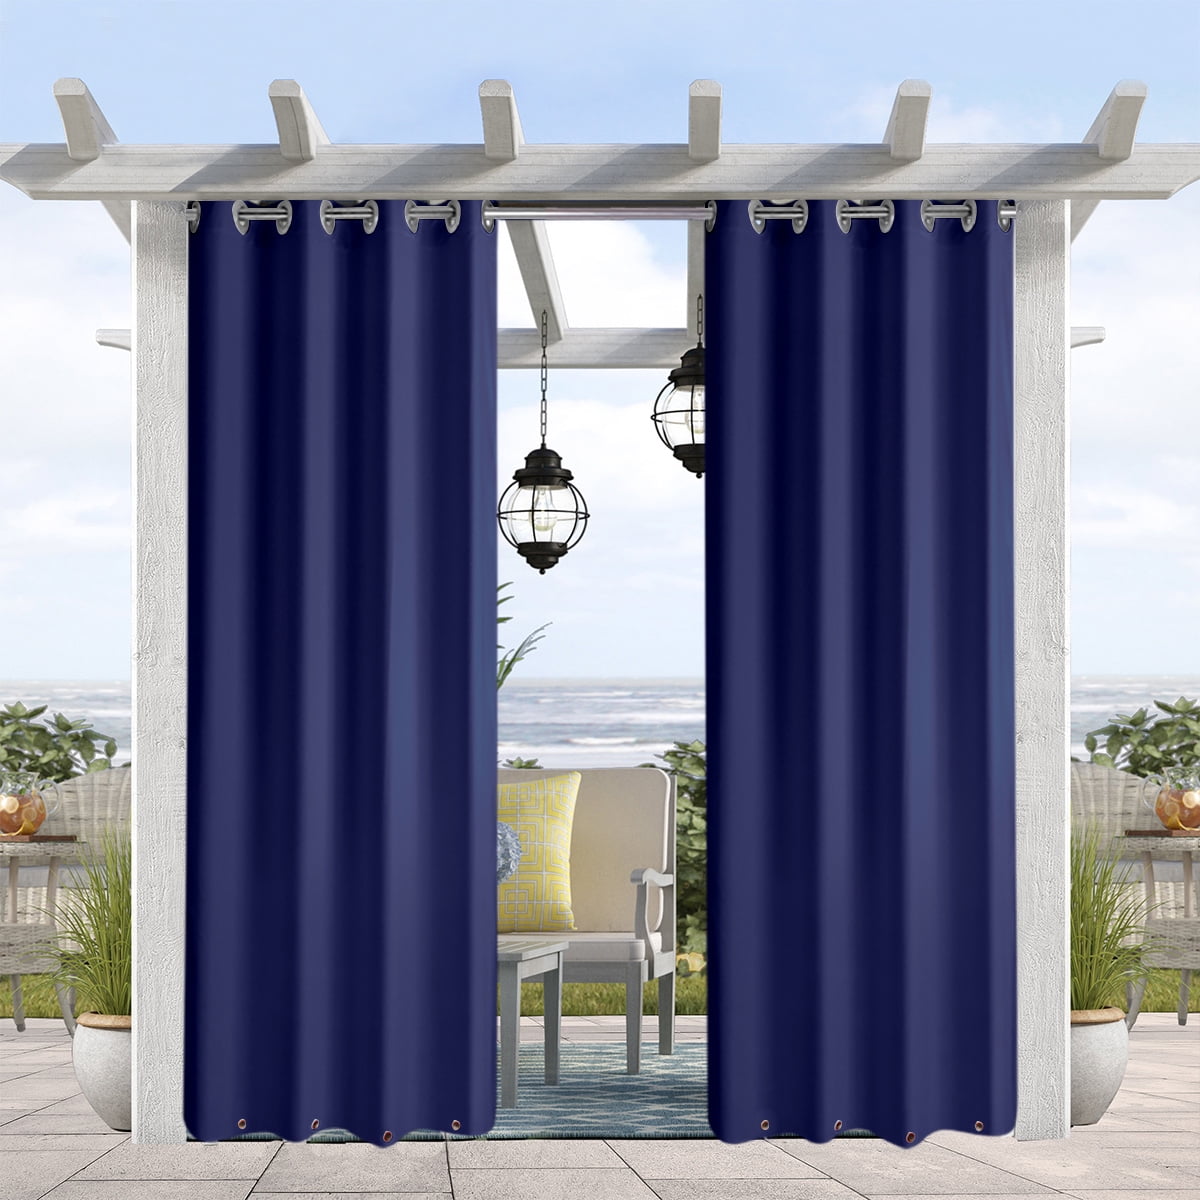 50x120-Inch Outdoor Single Window Curtain Panel Blackout UV Ray Waterproof,Blue 